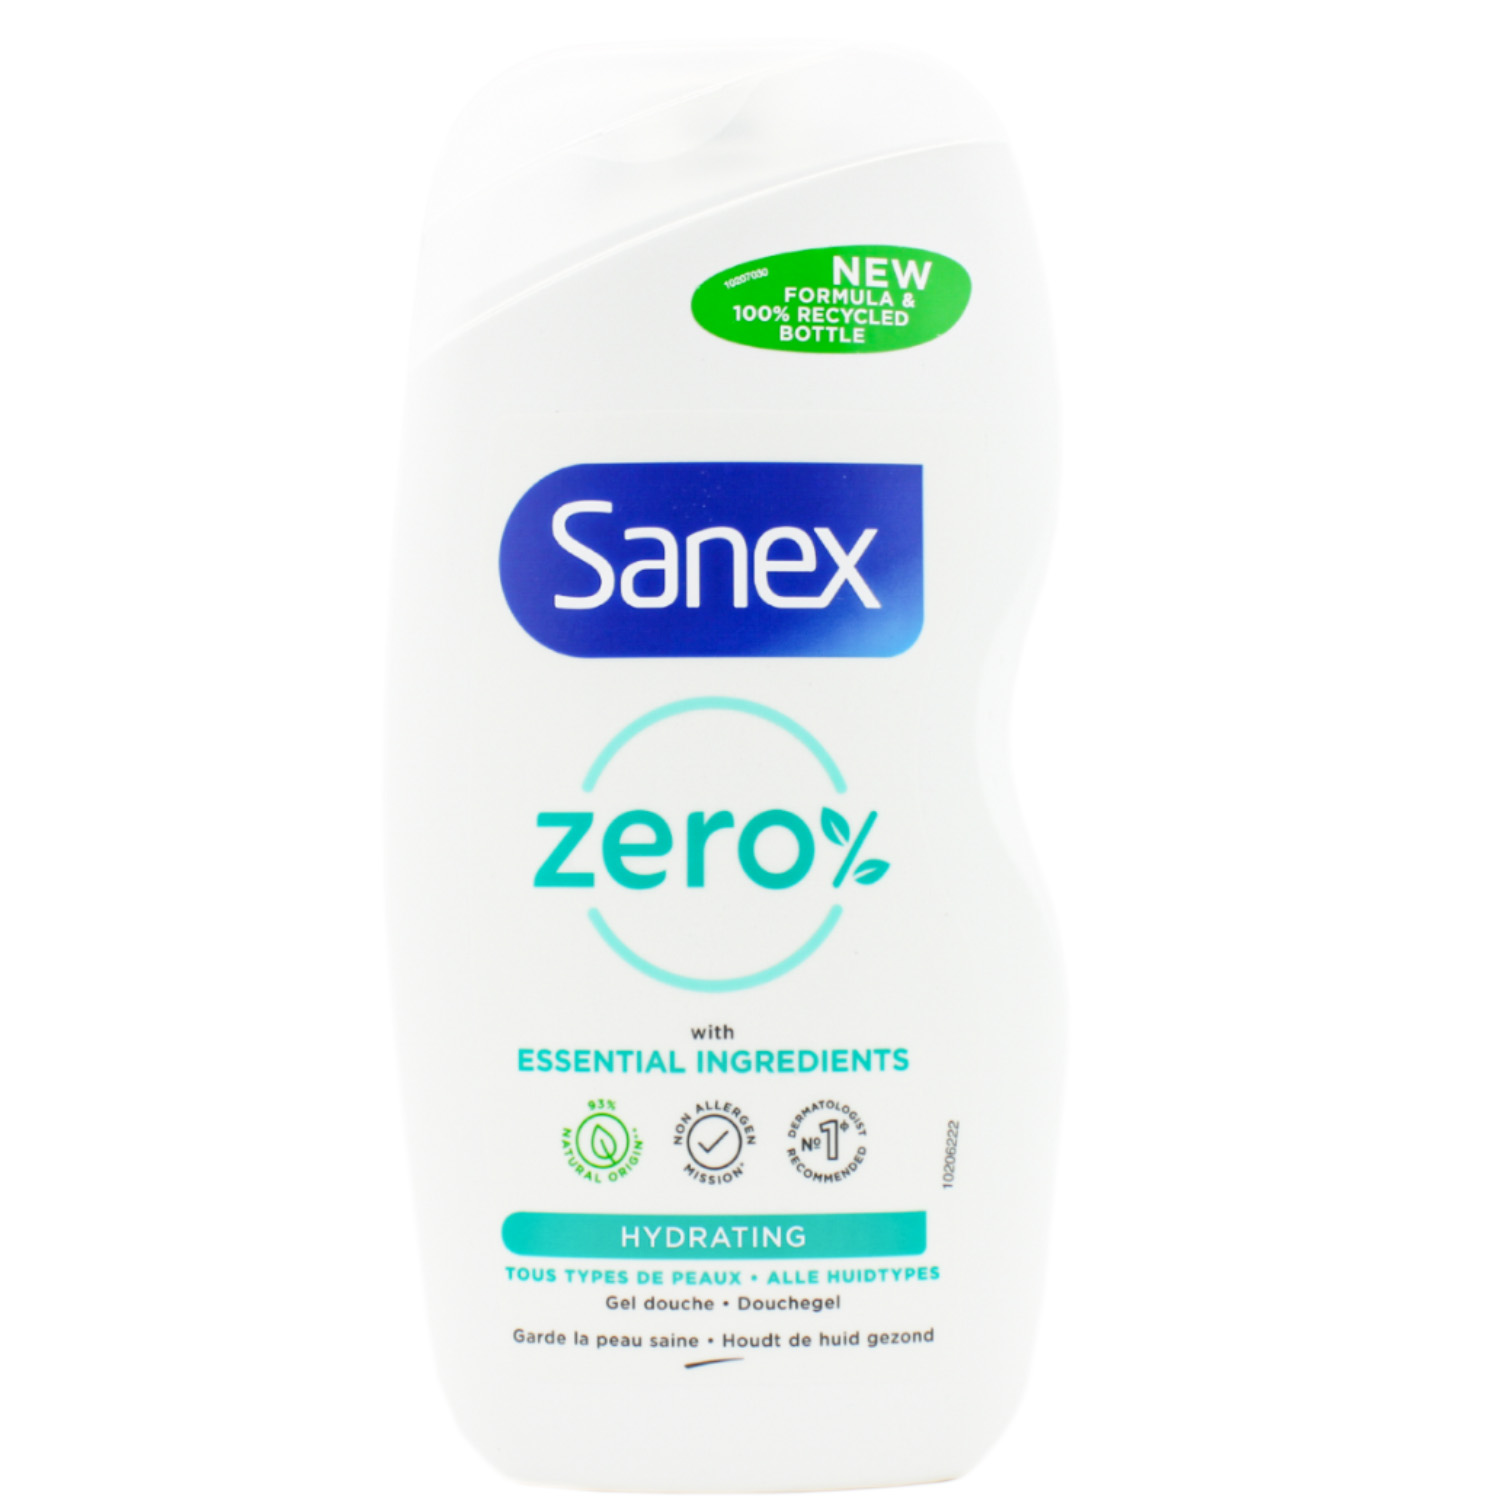 Sanex Zero% Hydrating Shower Gel 250ml